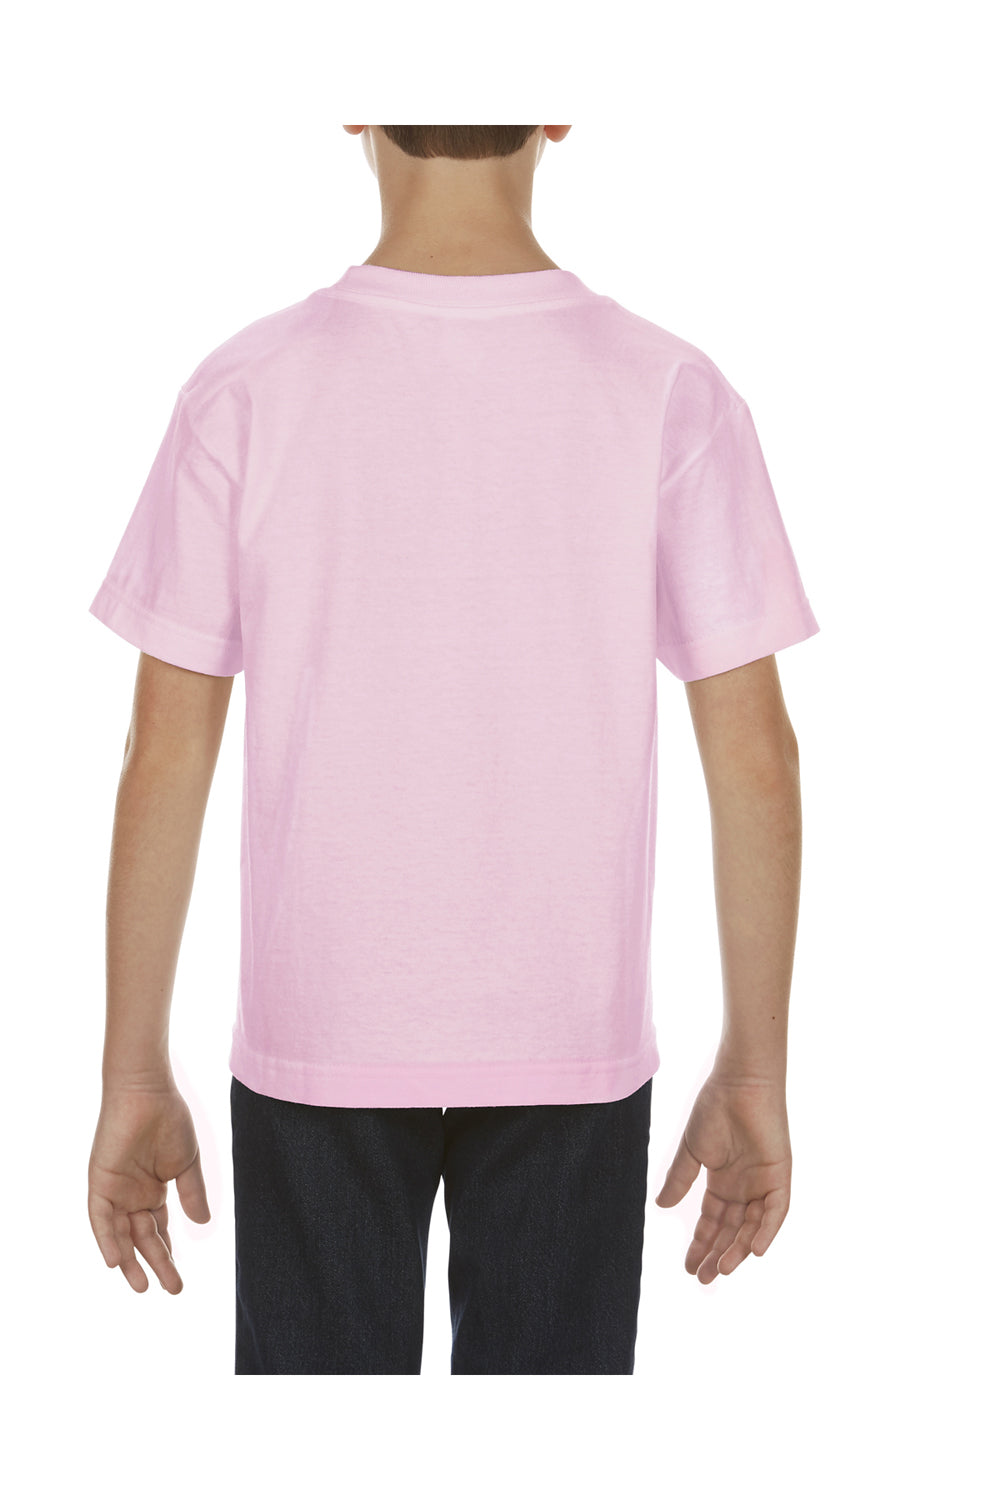 Alstyle AL3381 Youth Short Sleeve Crewneck T-Shirt Pink Back